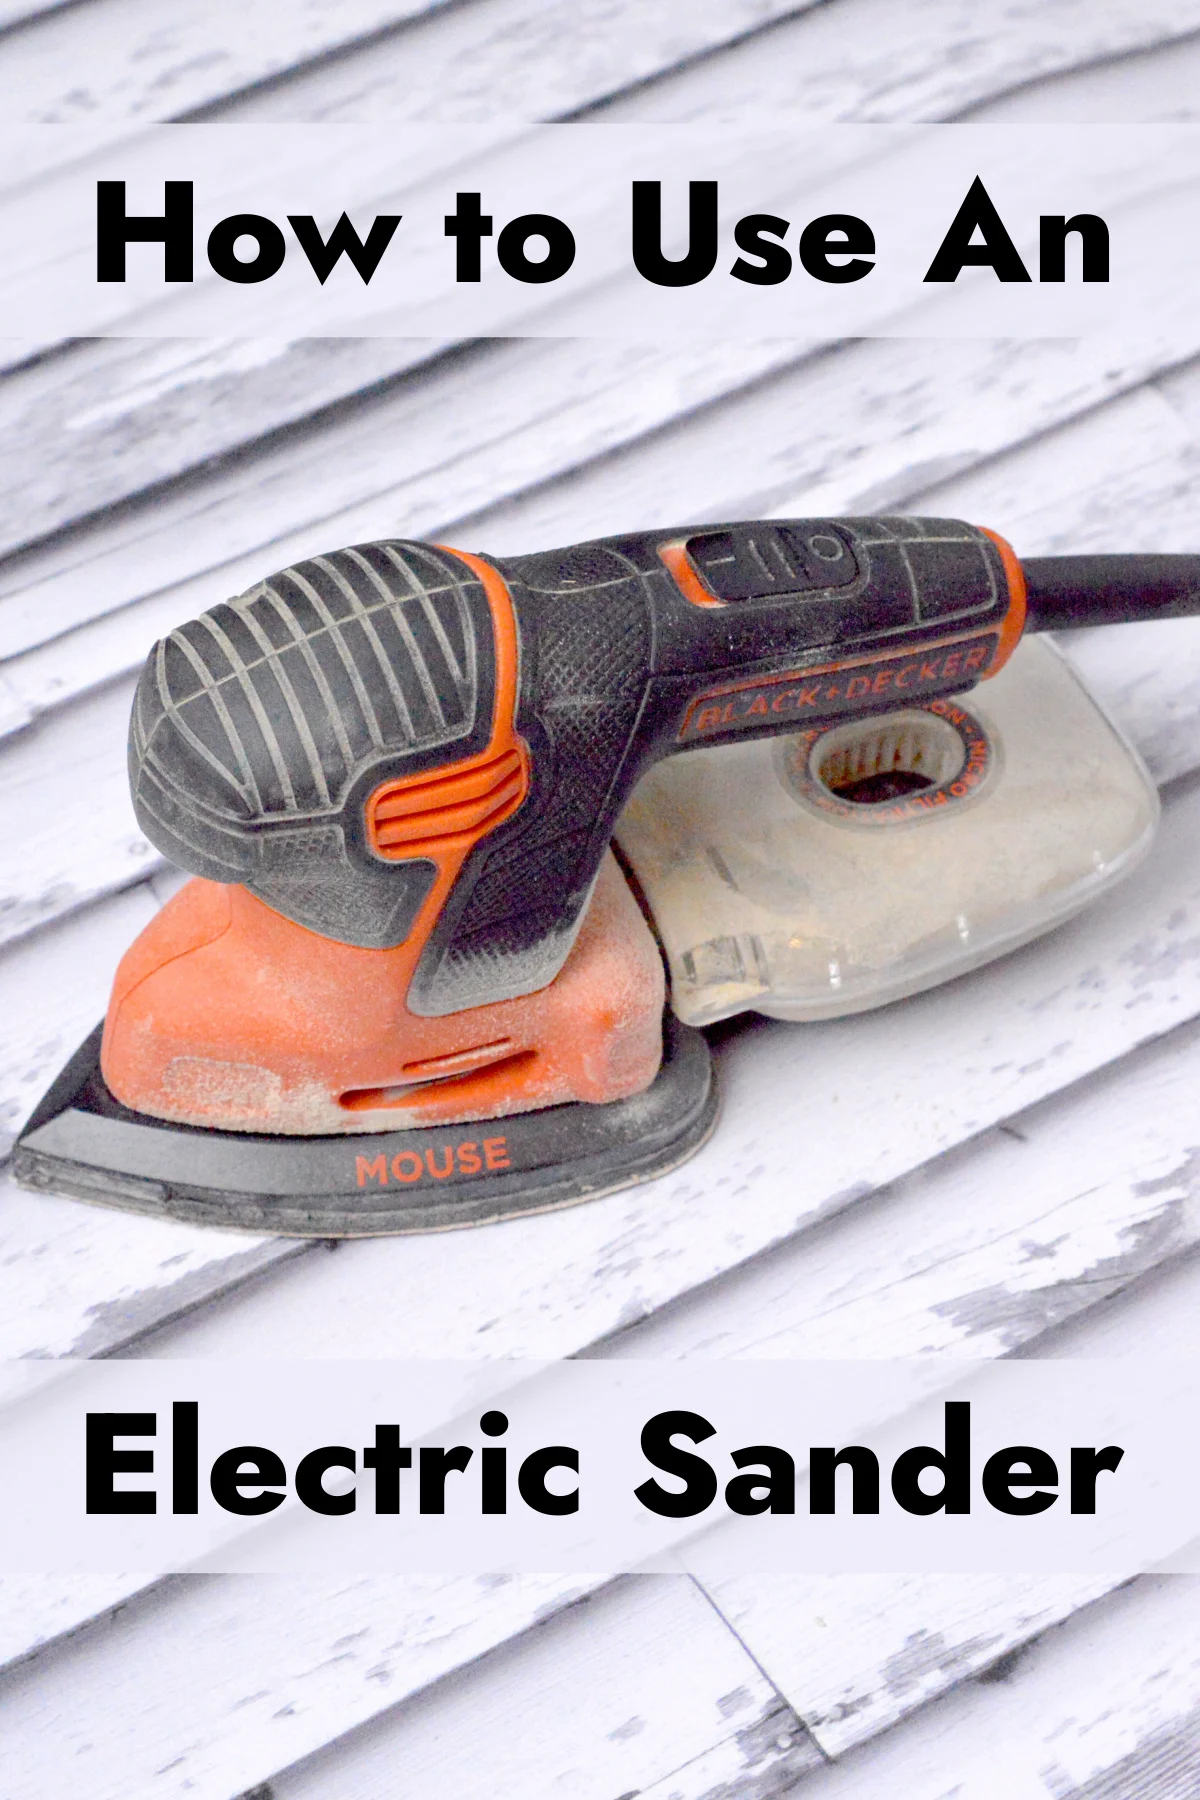 BLACK+DECKER Electric Sander